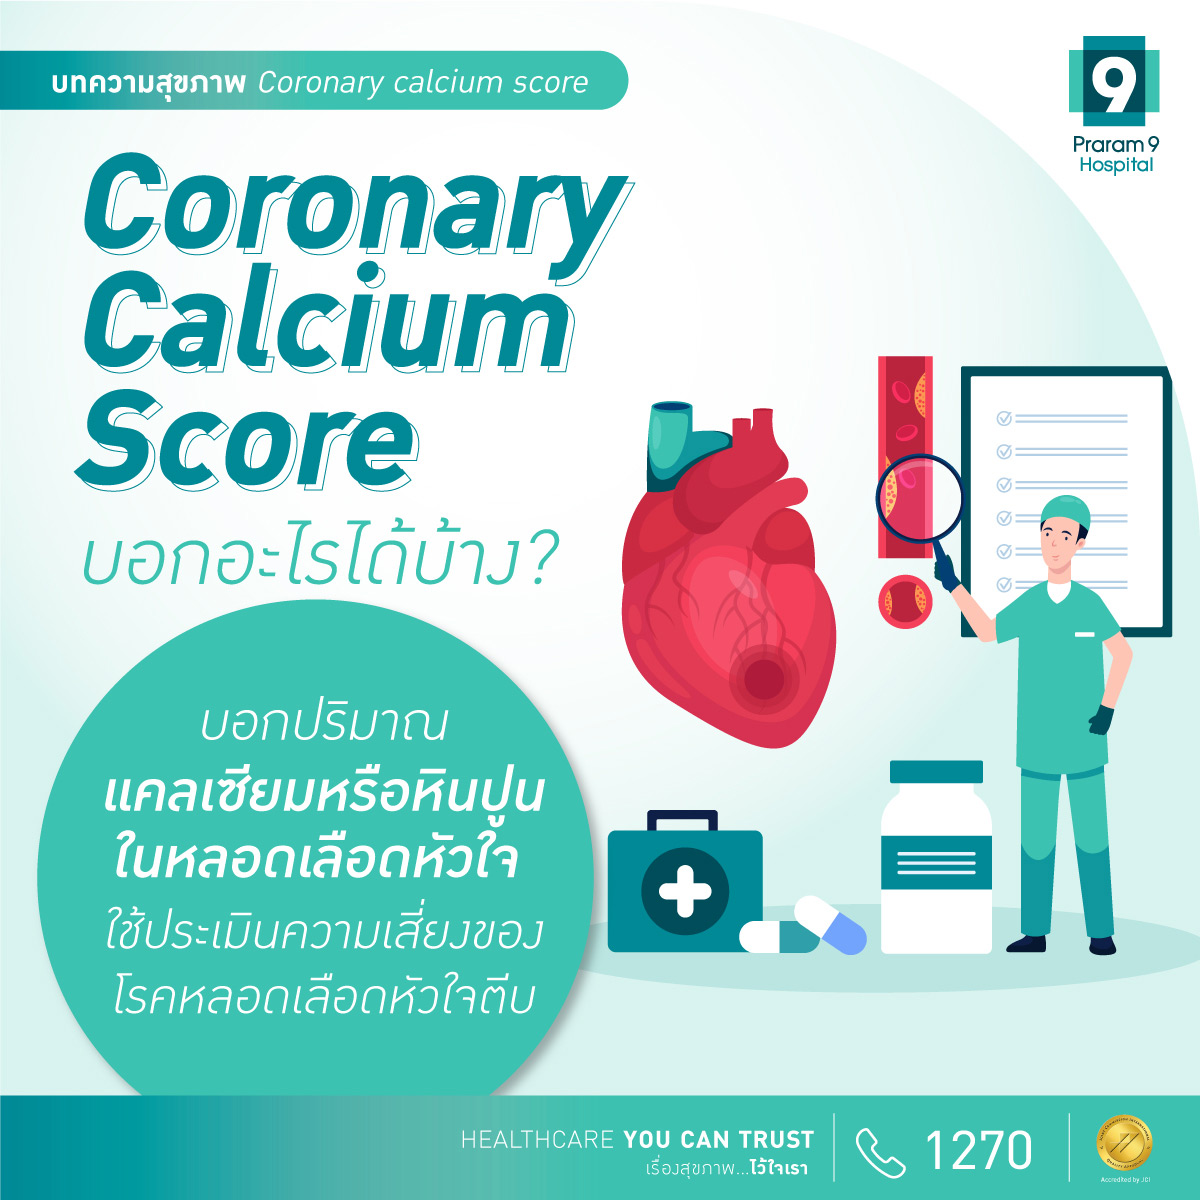 Coronary calcium score บอกอะไรได้บ้าง?